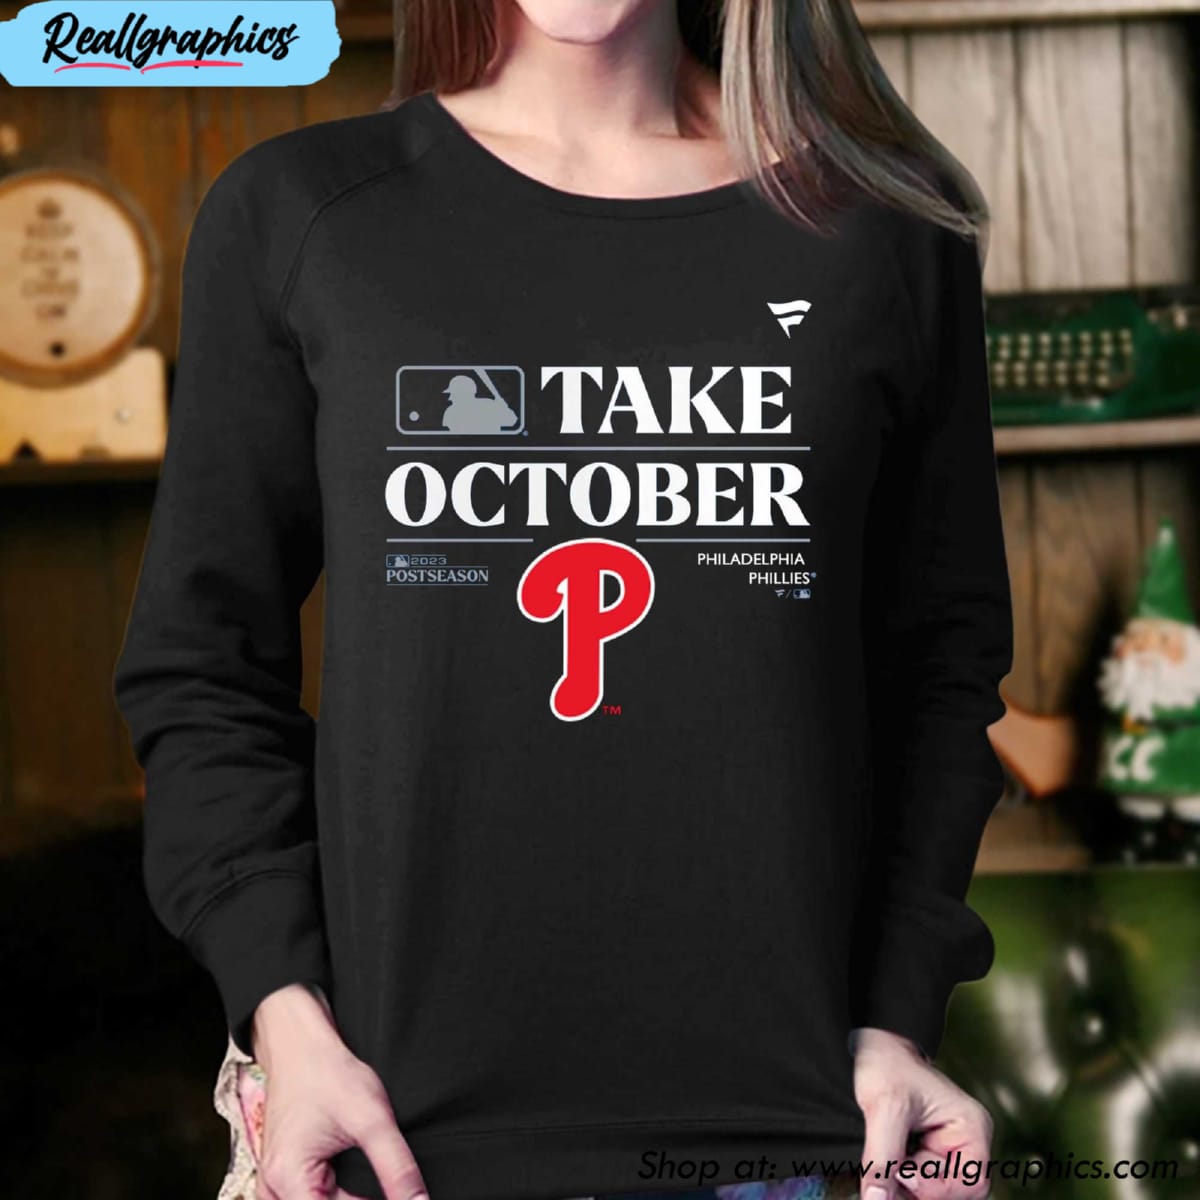 Philadelphia Phillies Fanatics Branded City P Long Sleeve T-Shirt - Royal